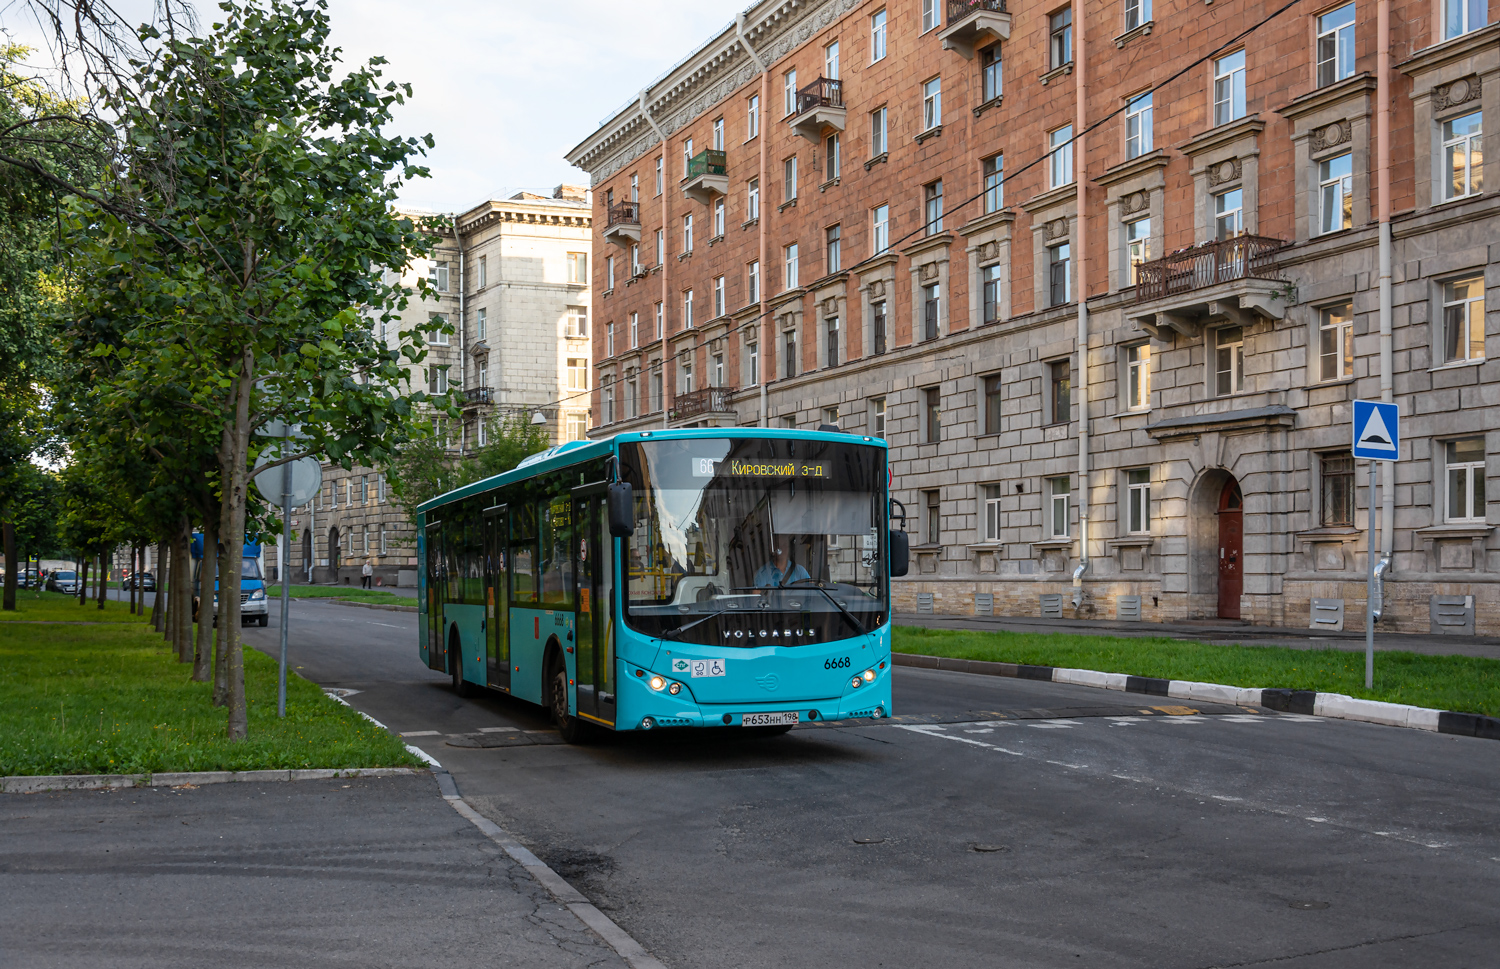 Saint Petersburg, Volgabus-5270.G4 (LNG) # 6668